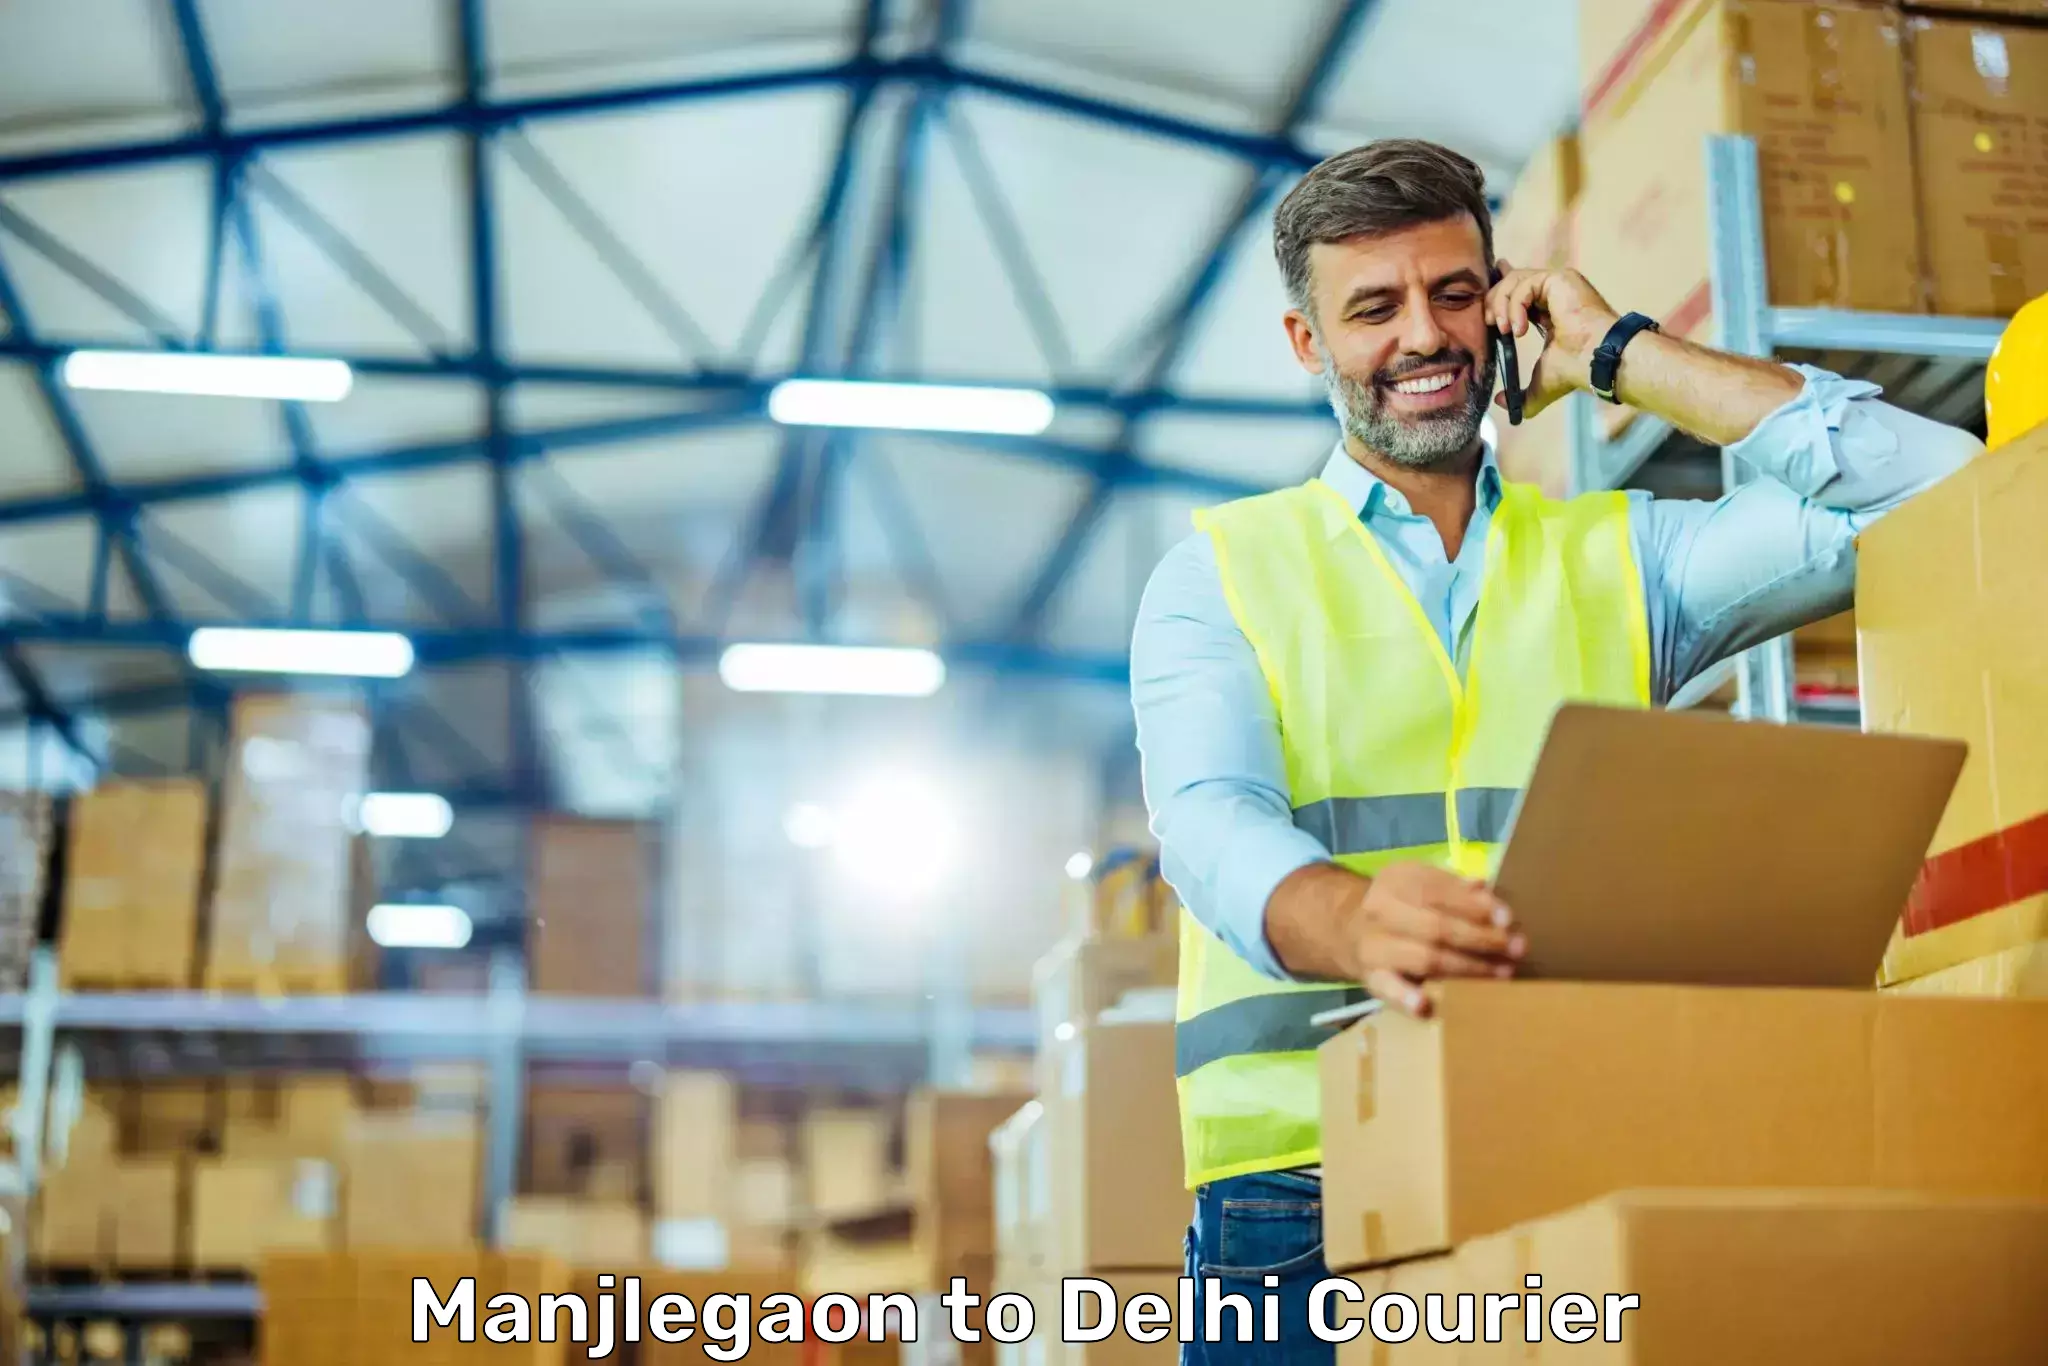 Reliable freight solutions Manjlegaon to Delhi